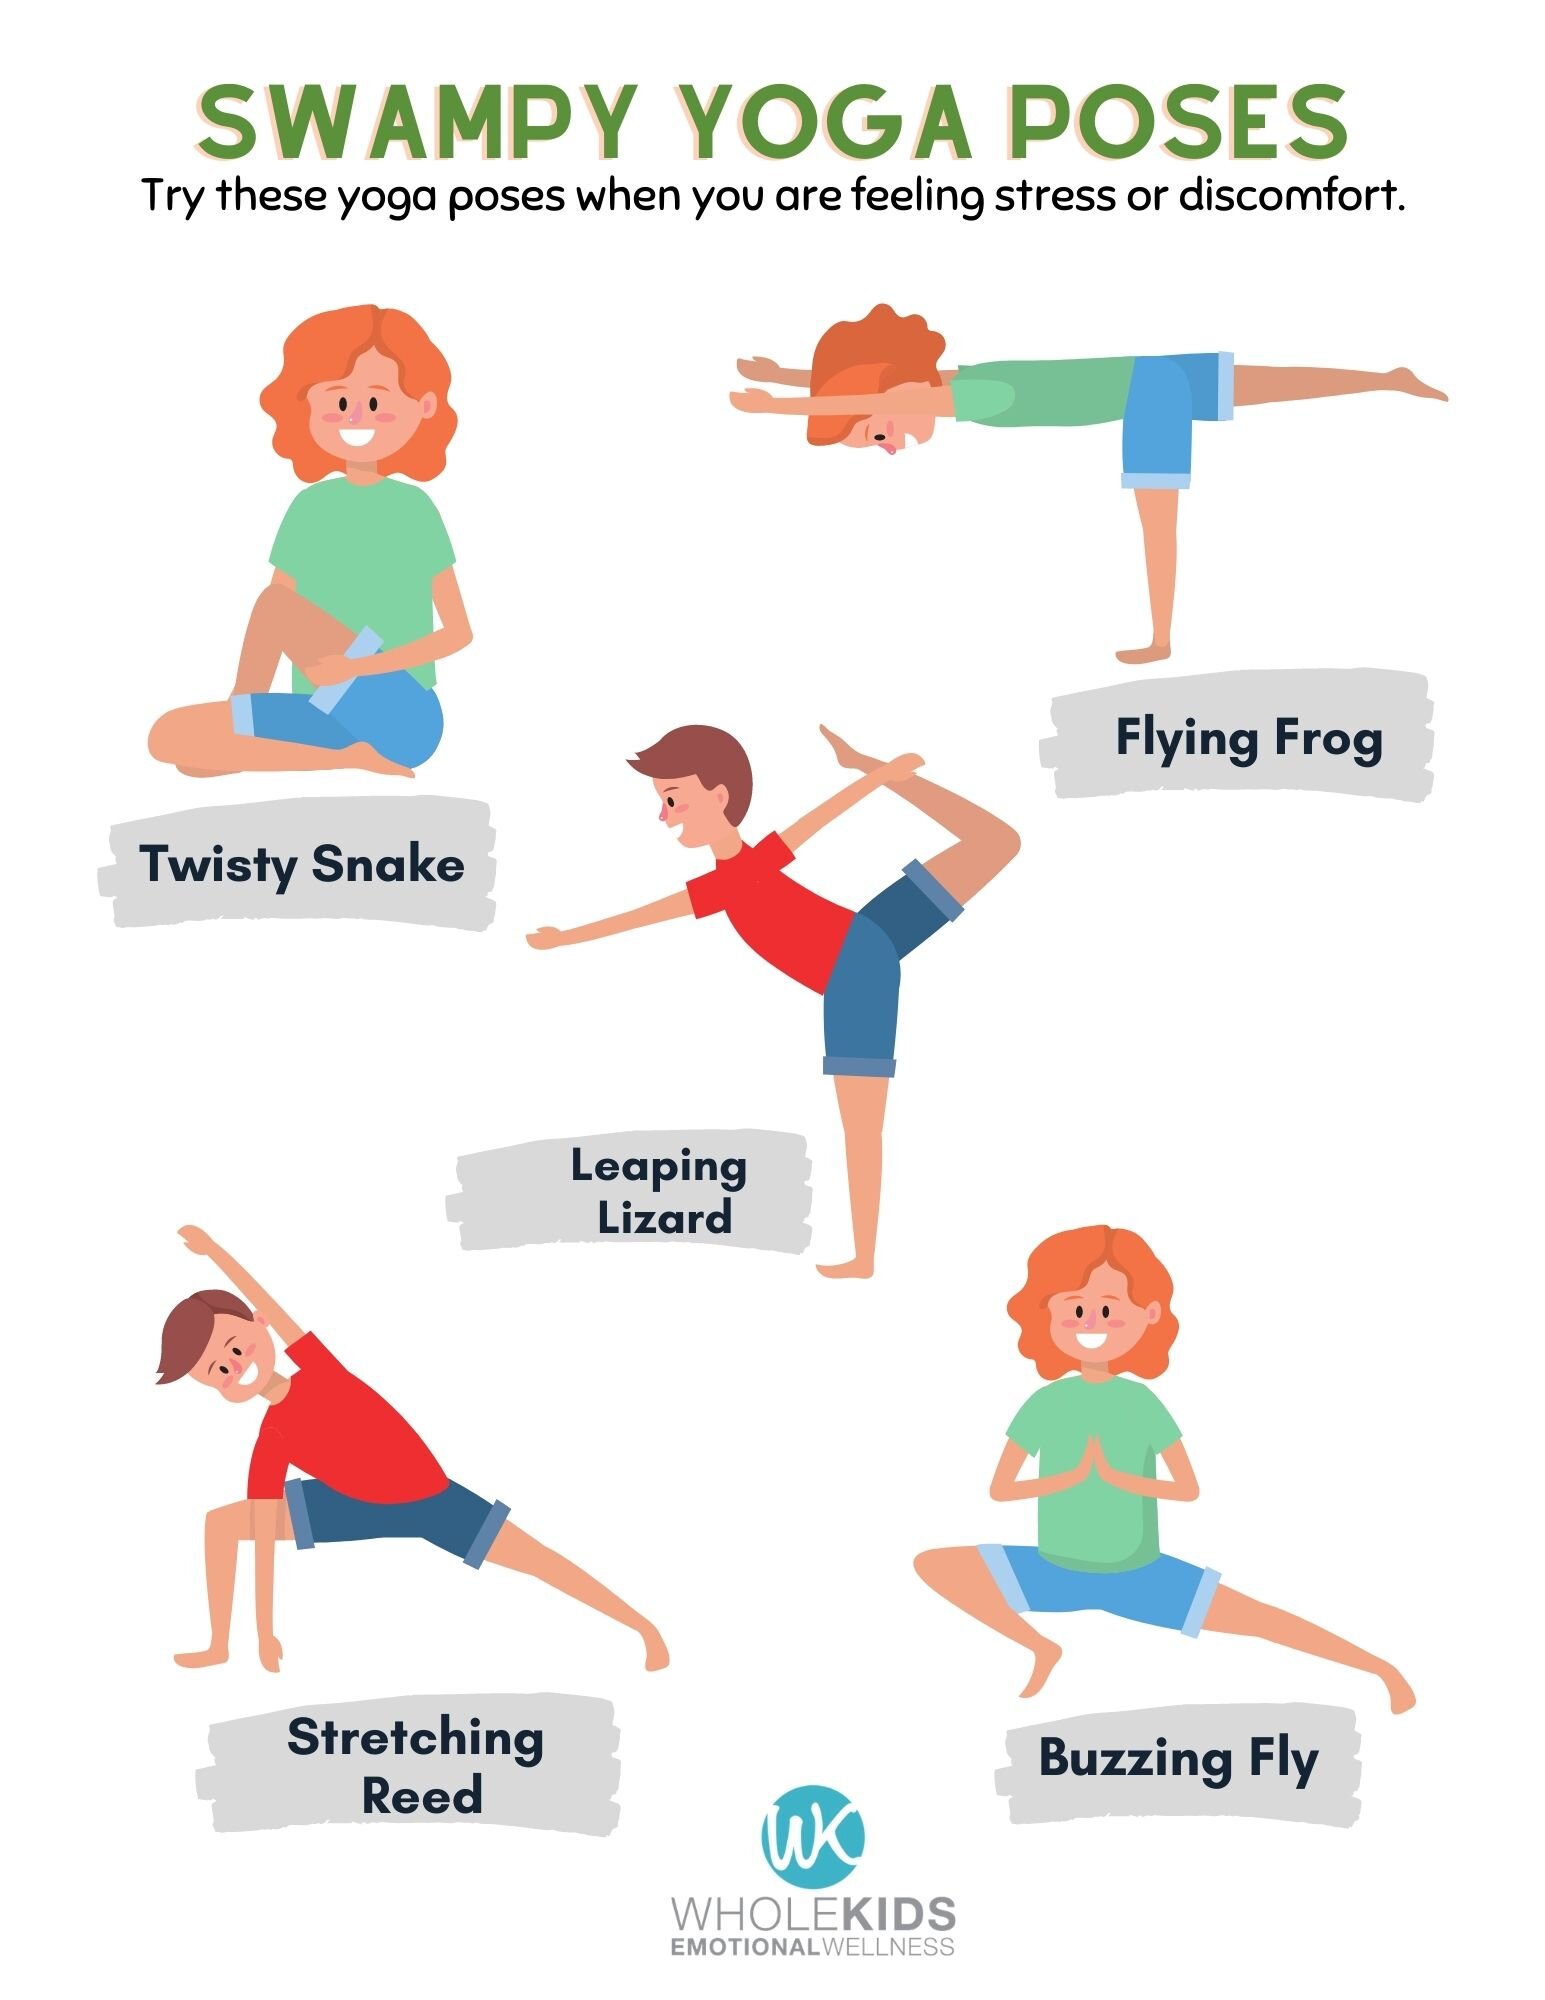 5 Fun Yoga Posts to De-Stress — WholeKids Emotional Wellness